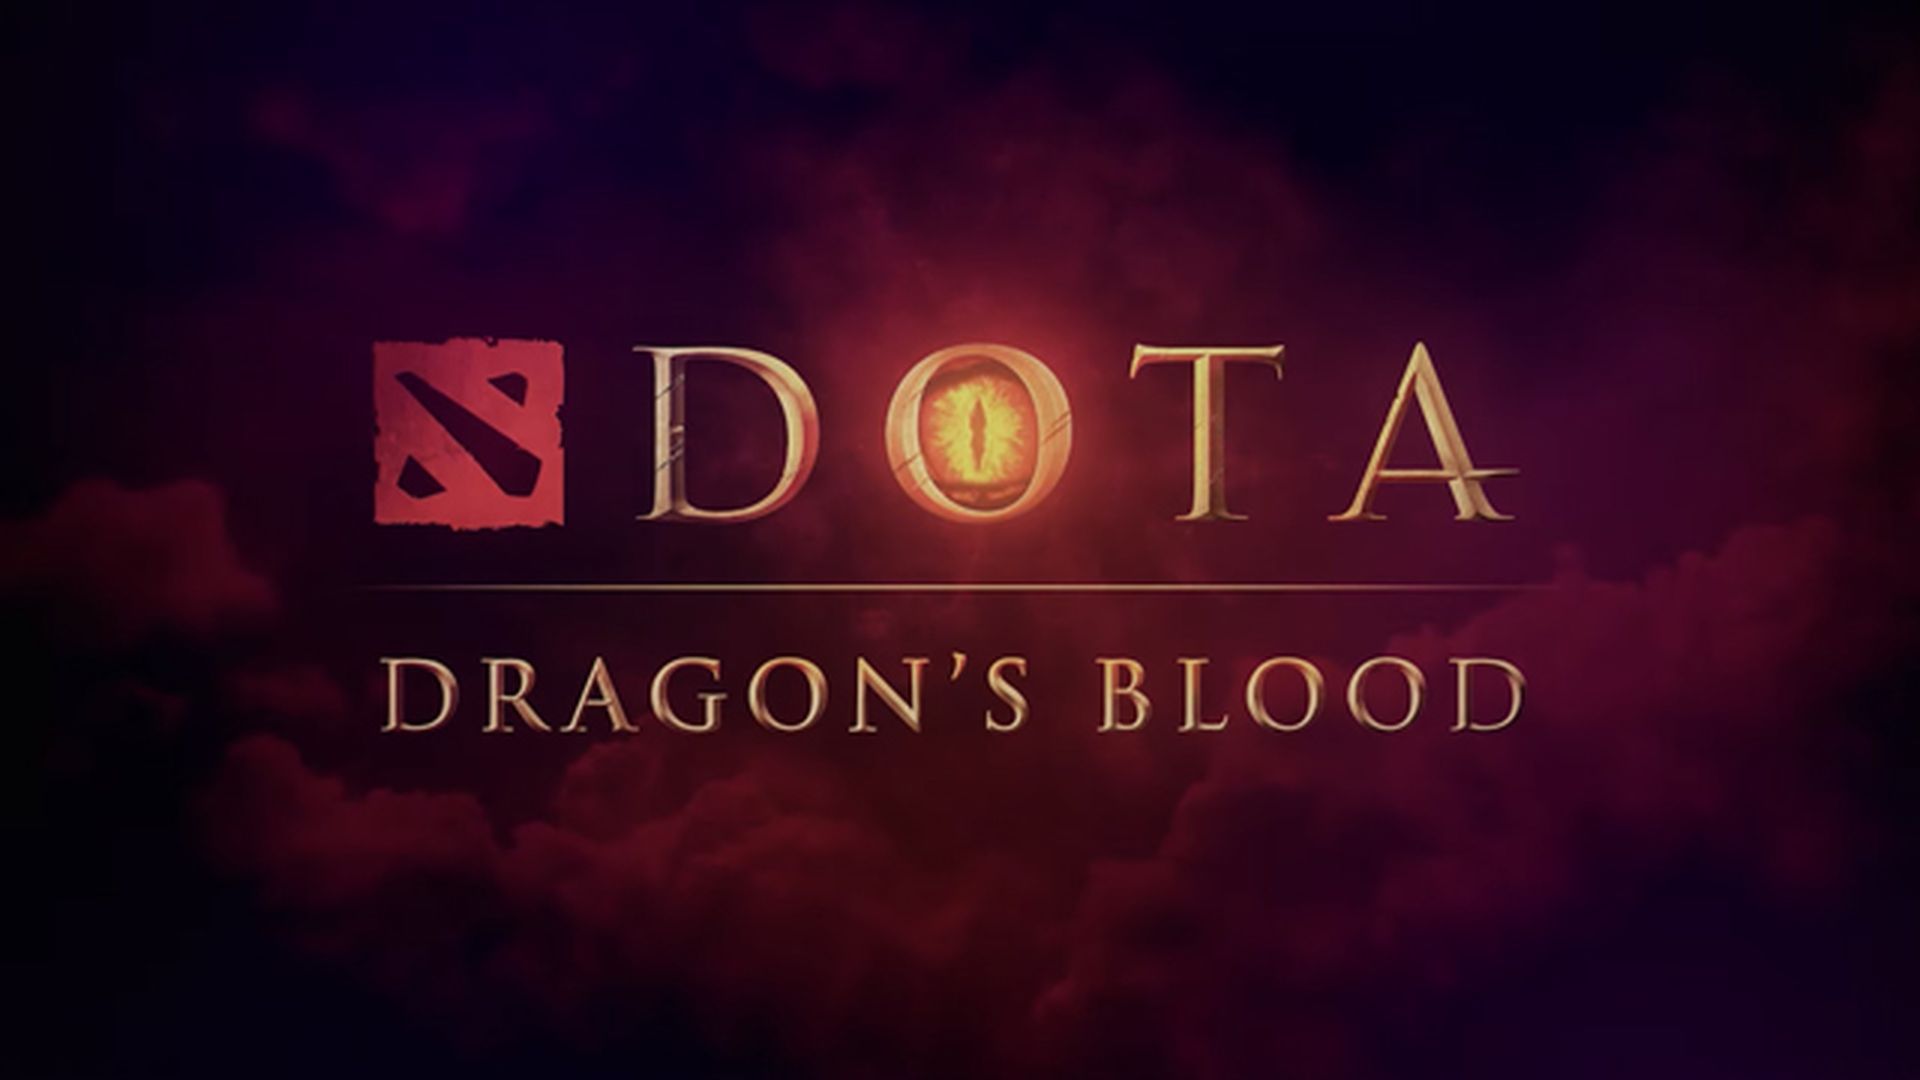 DOTA 2 gets DOTA: Dragon's Blood anime series coming to Netflix March 25